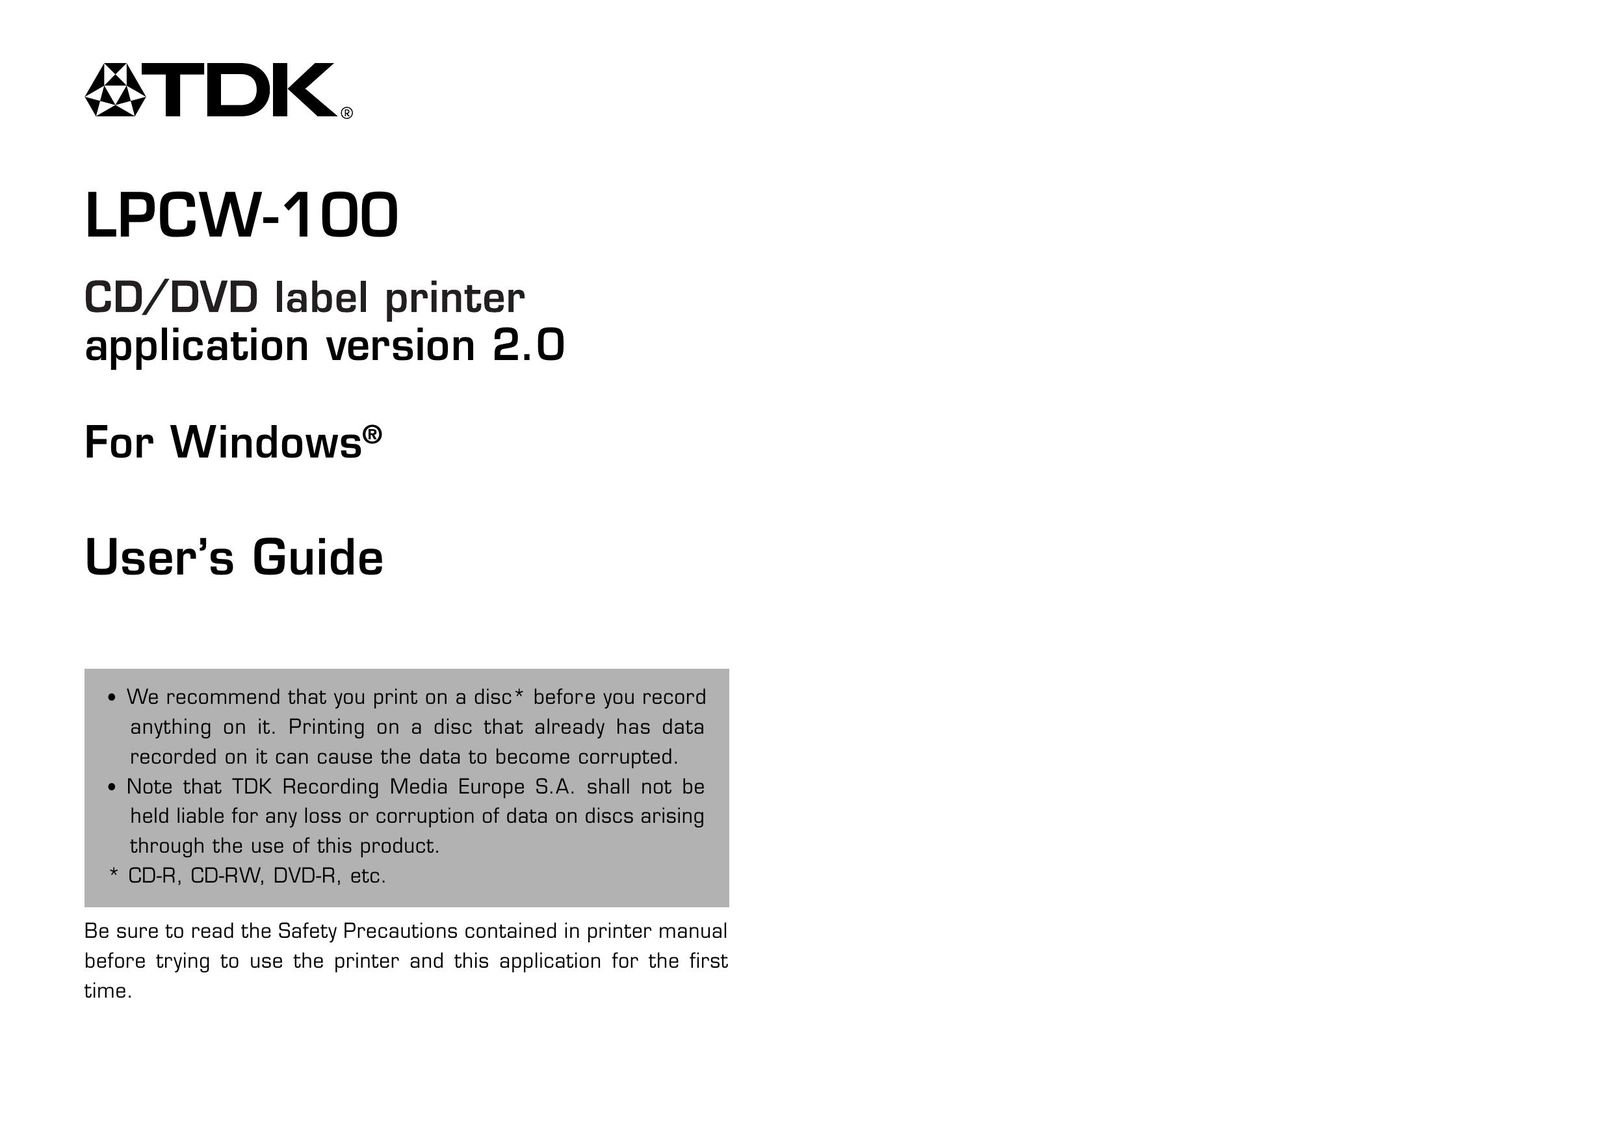 Casio LPCW-100 Printer User Manual